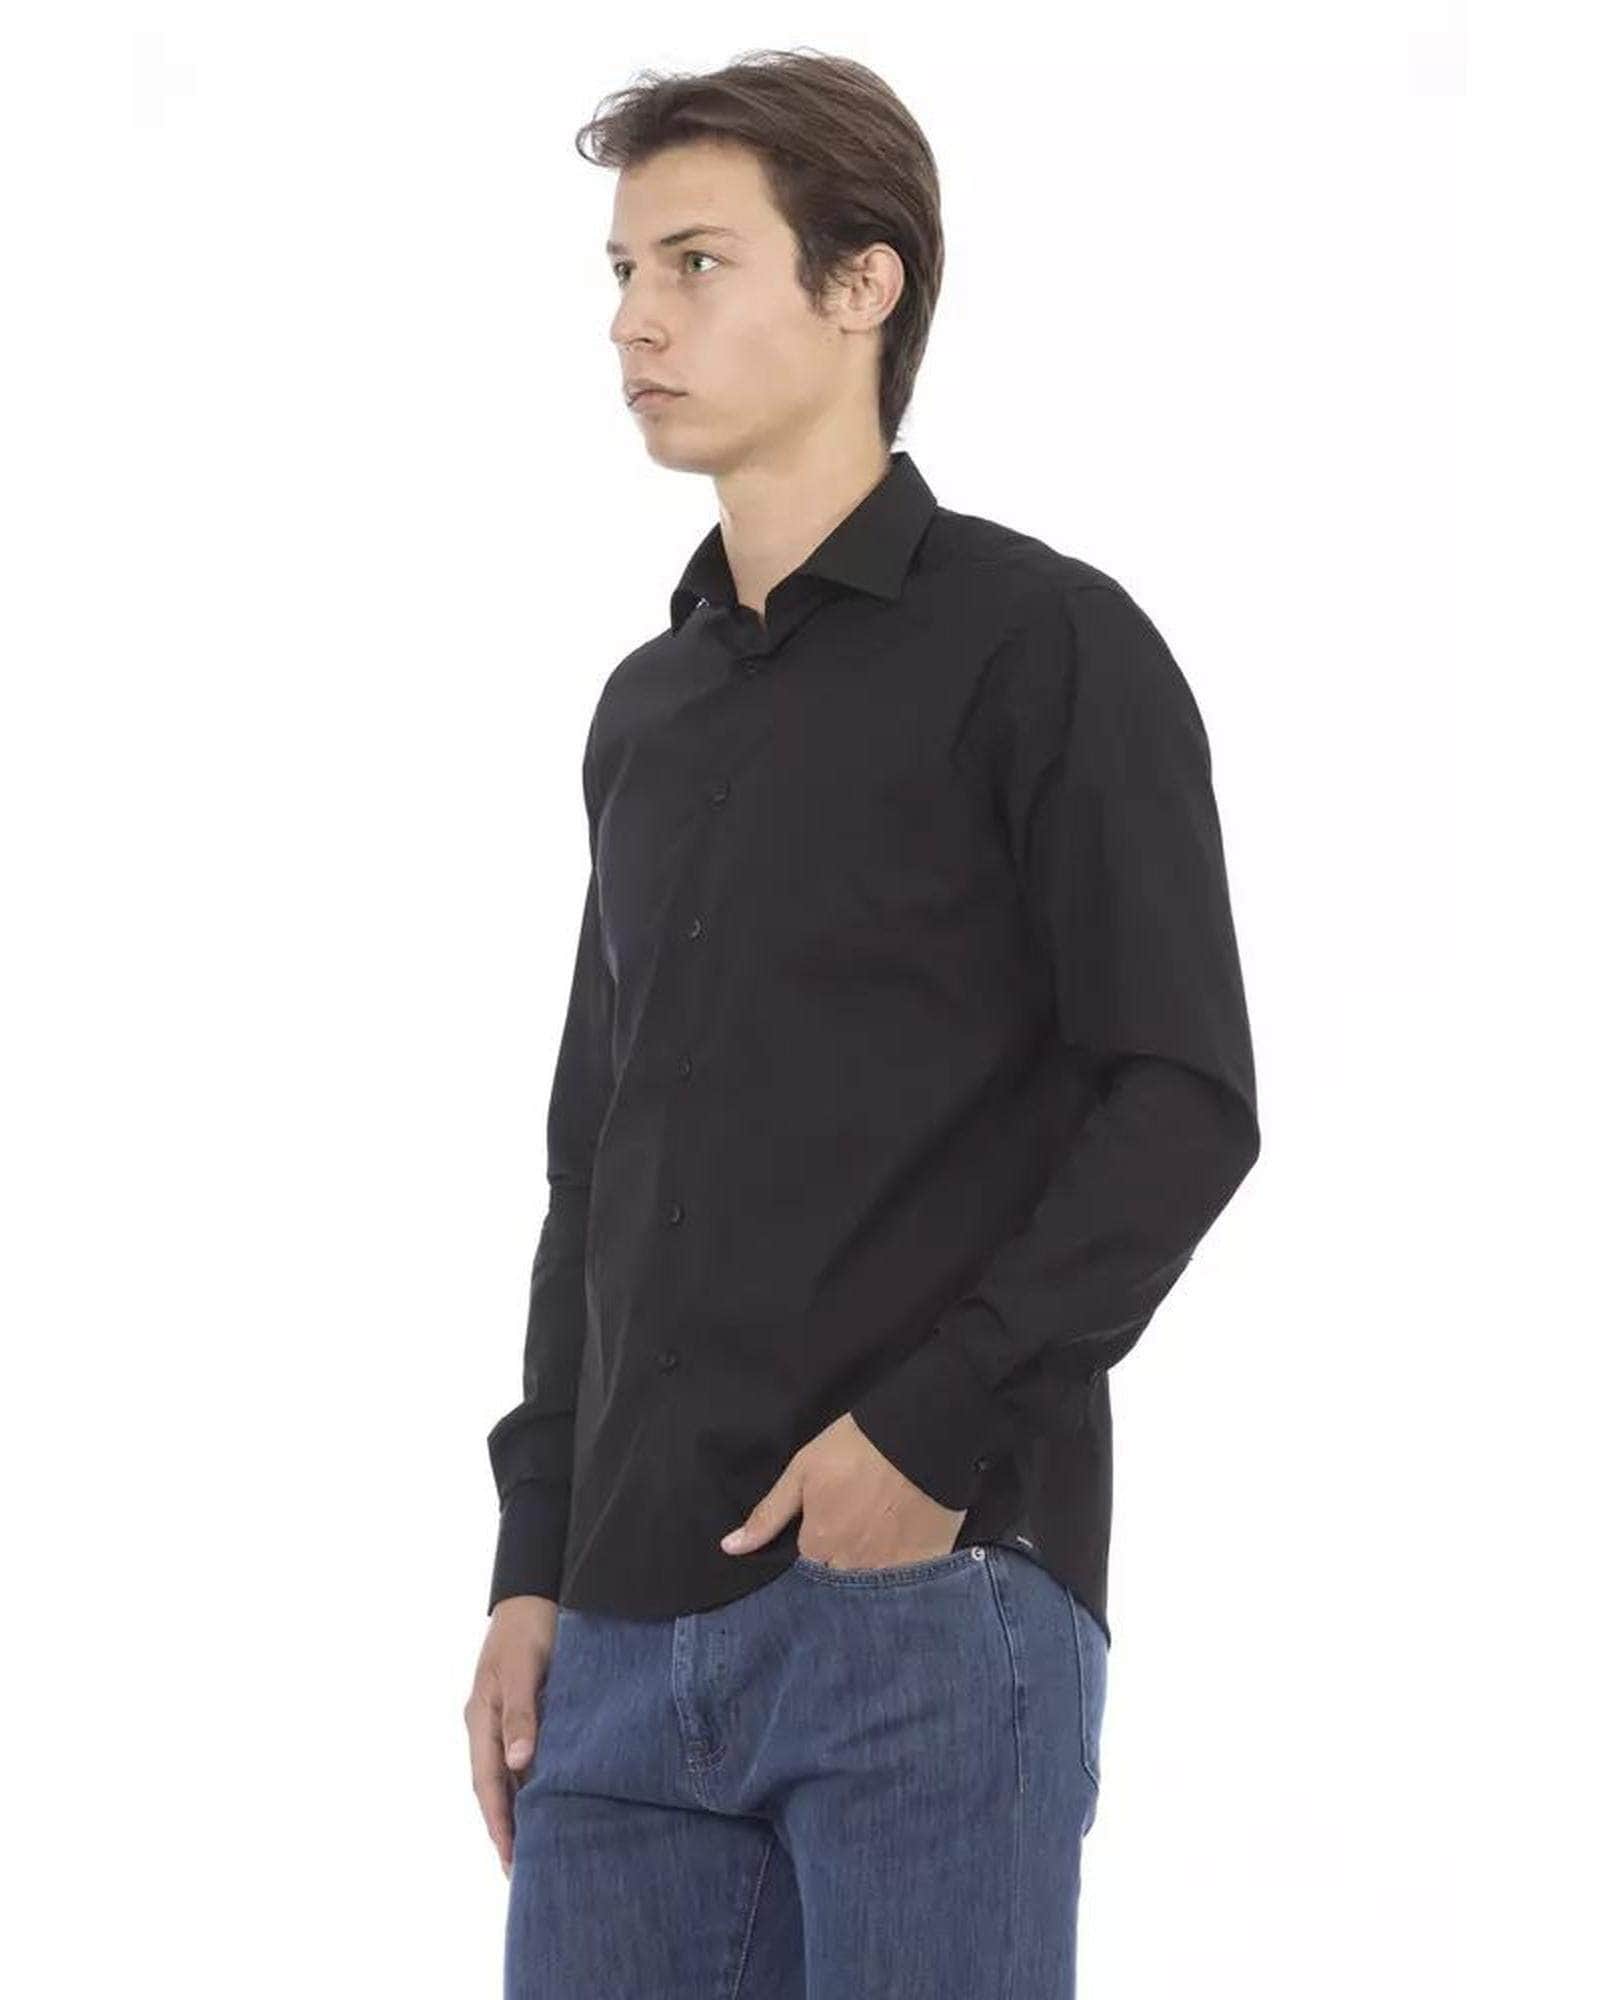 Stylish Baldinini Trend Black/White/Light Blue Cotton Shirt